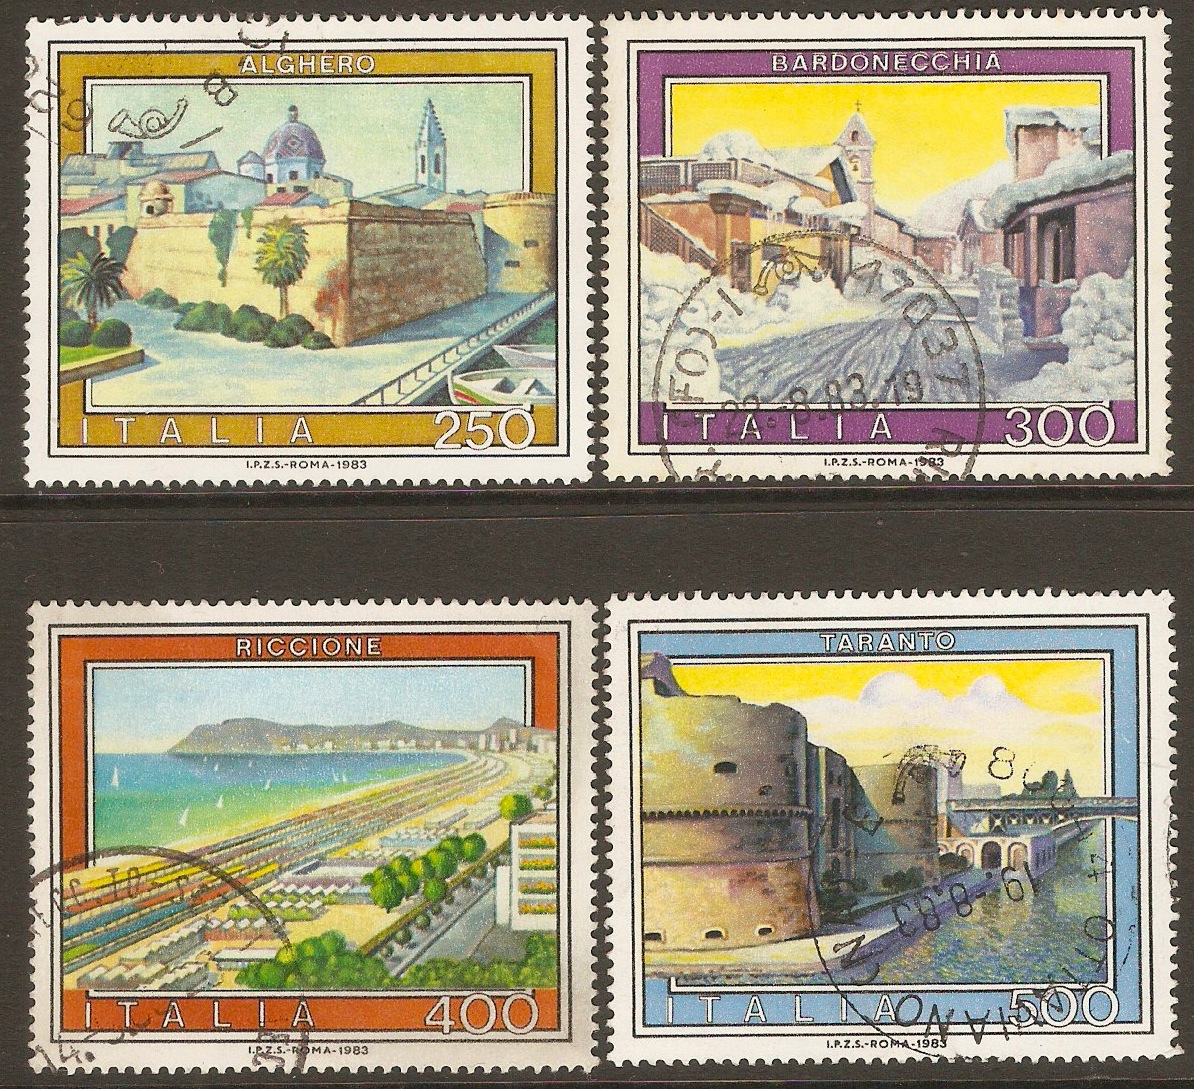 Italy 1983 Tourist Publicity set (10th. Series). SG1806-SG1809.